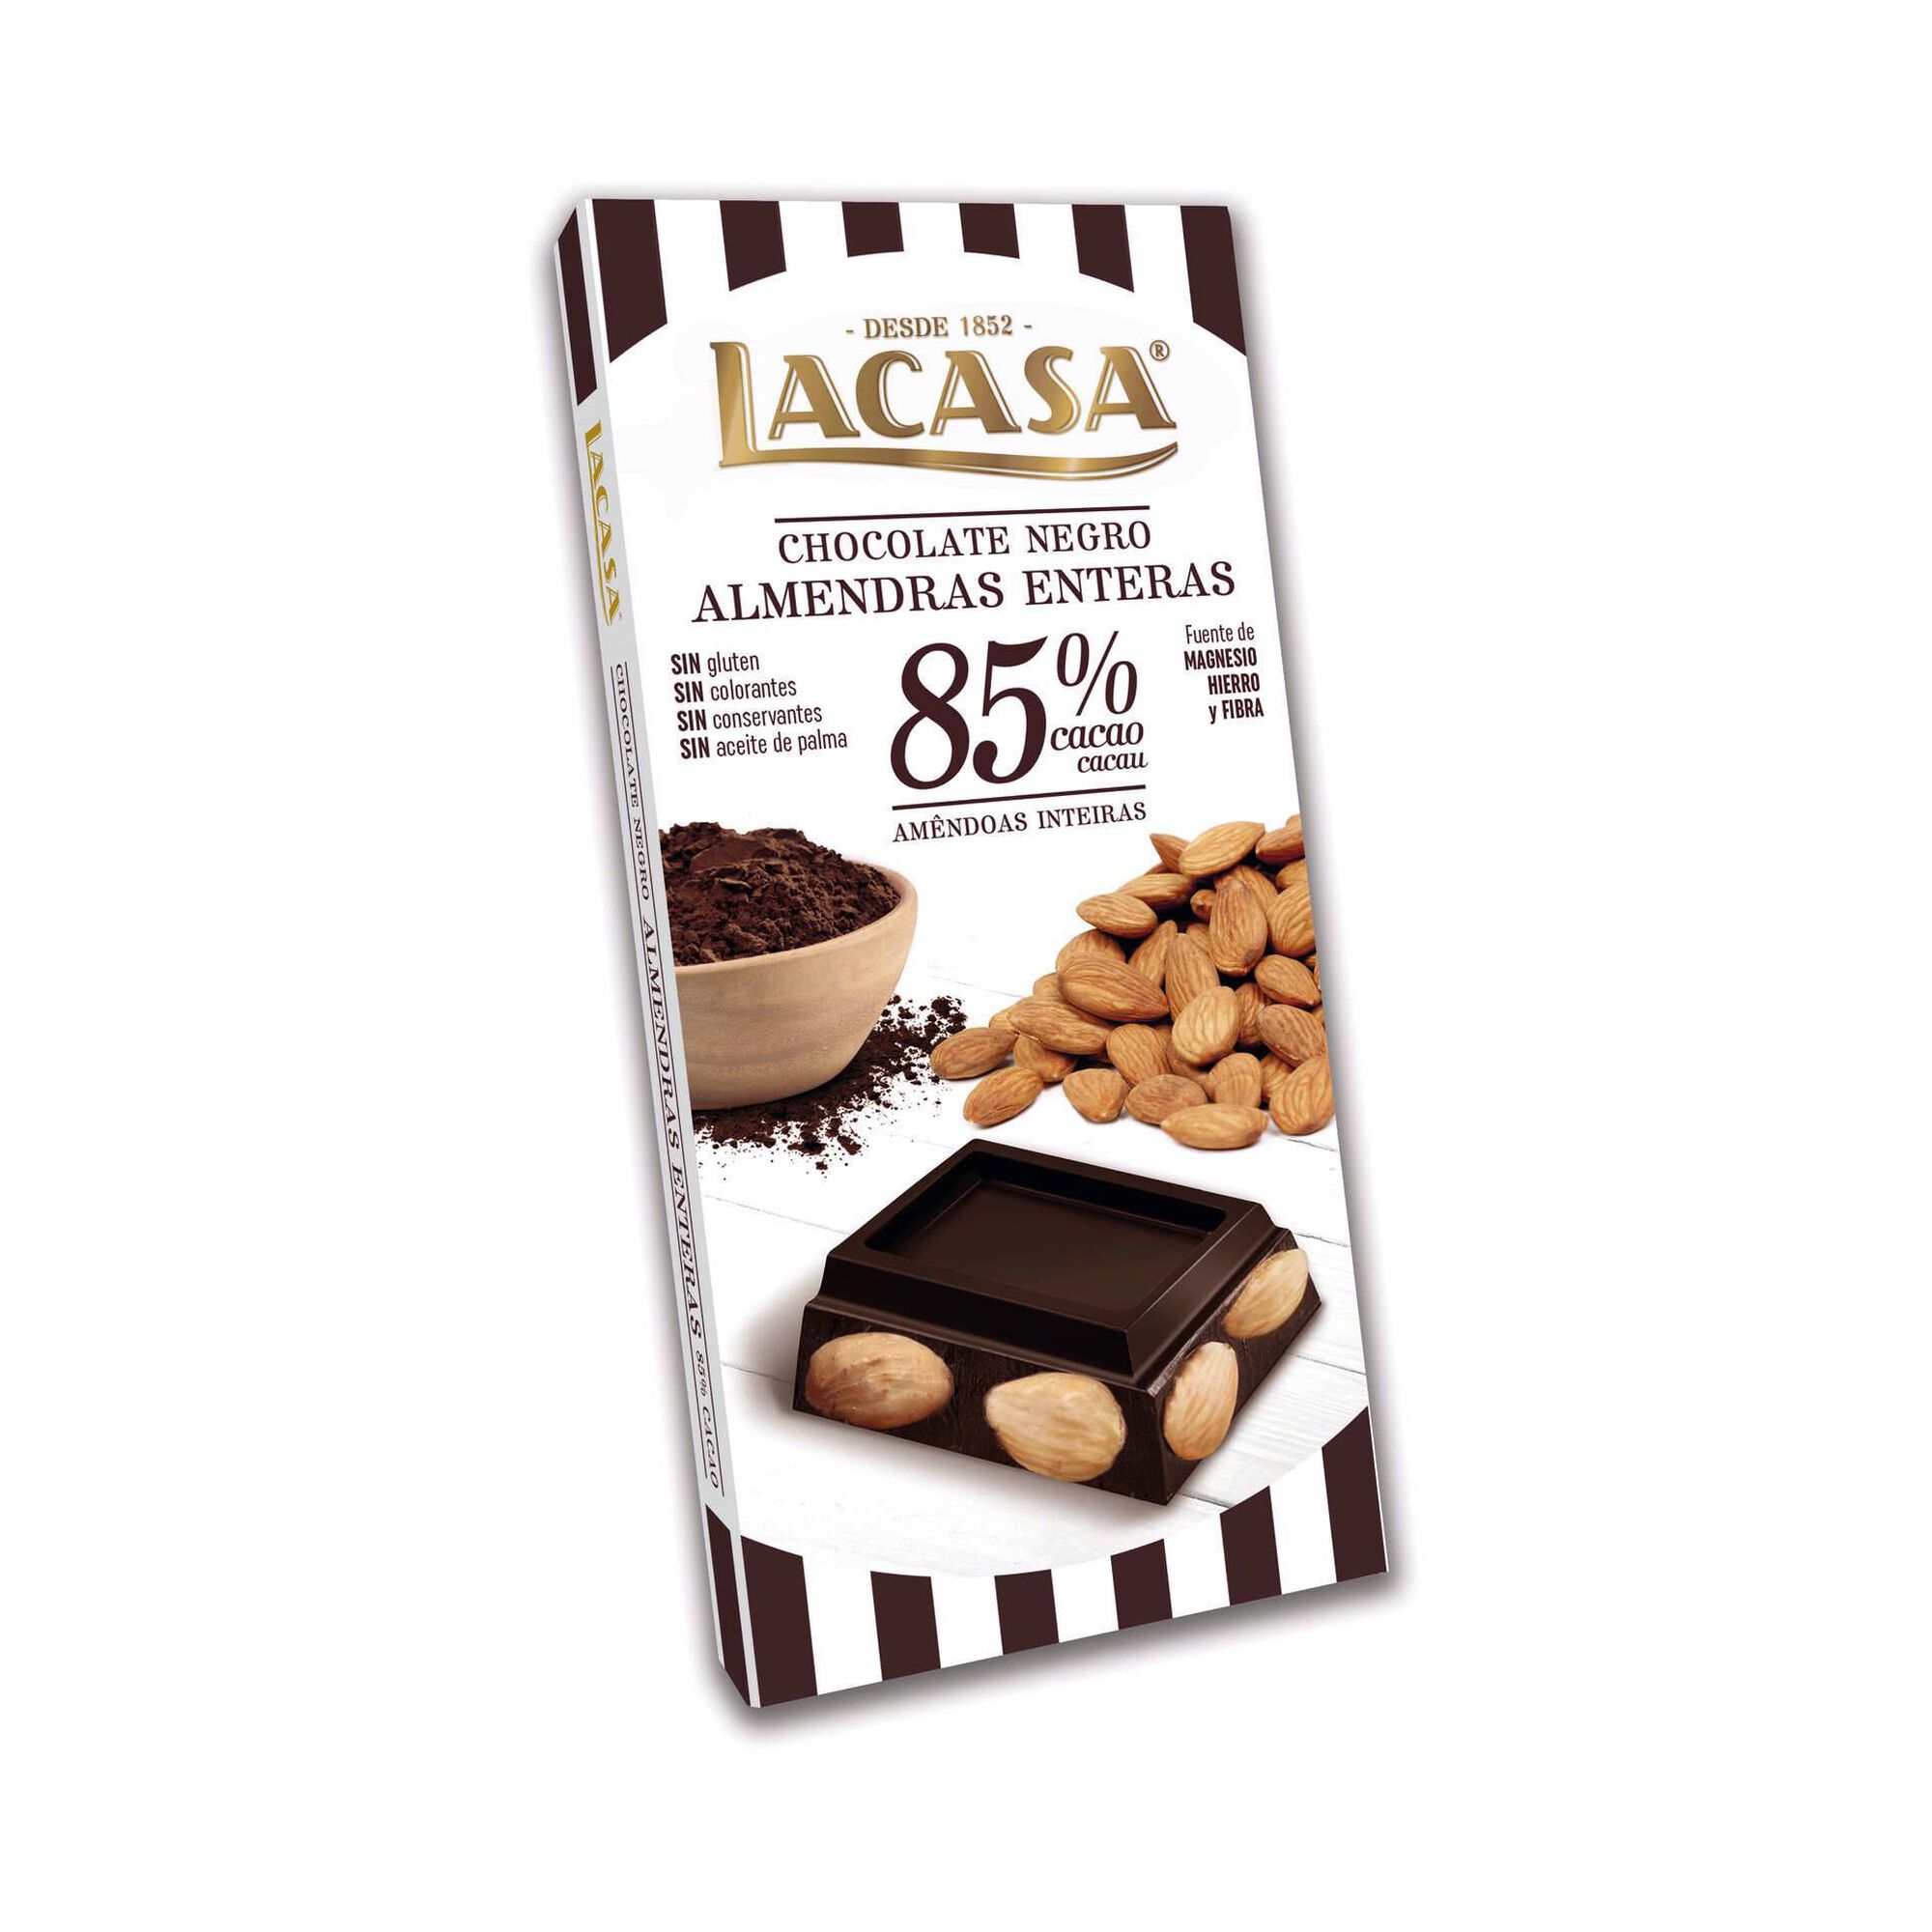 Tablete de Chocolate Negro com Amêndoa 85% Cacau sem Glúten